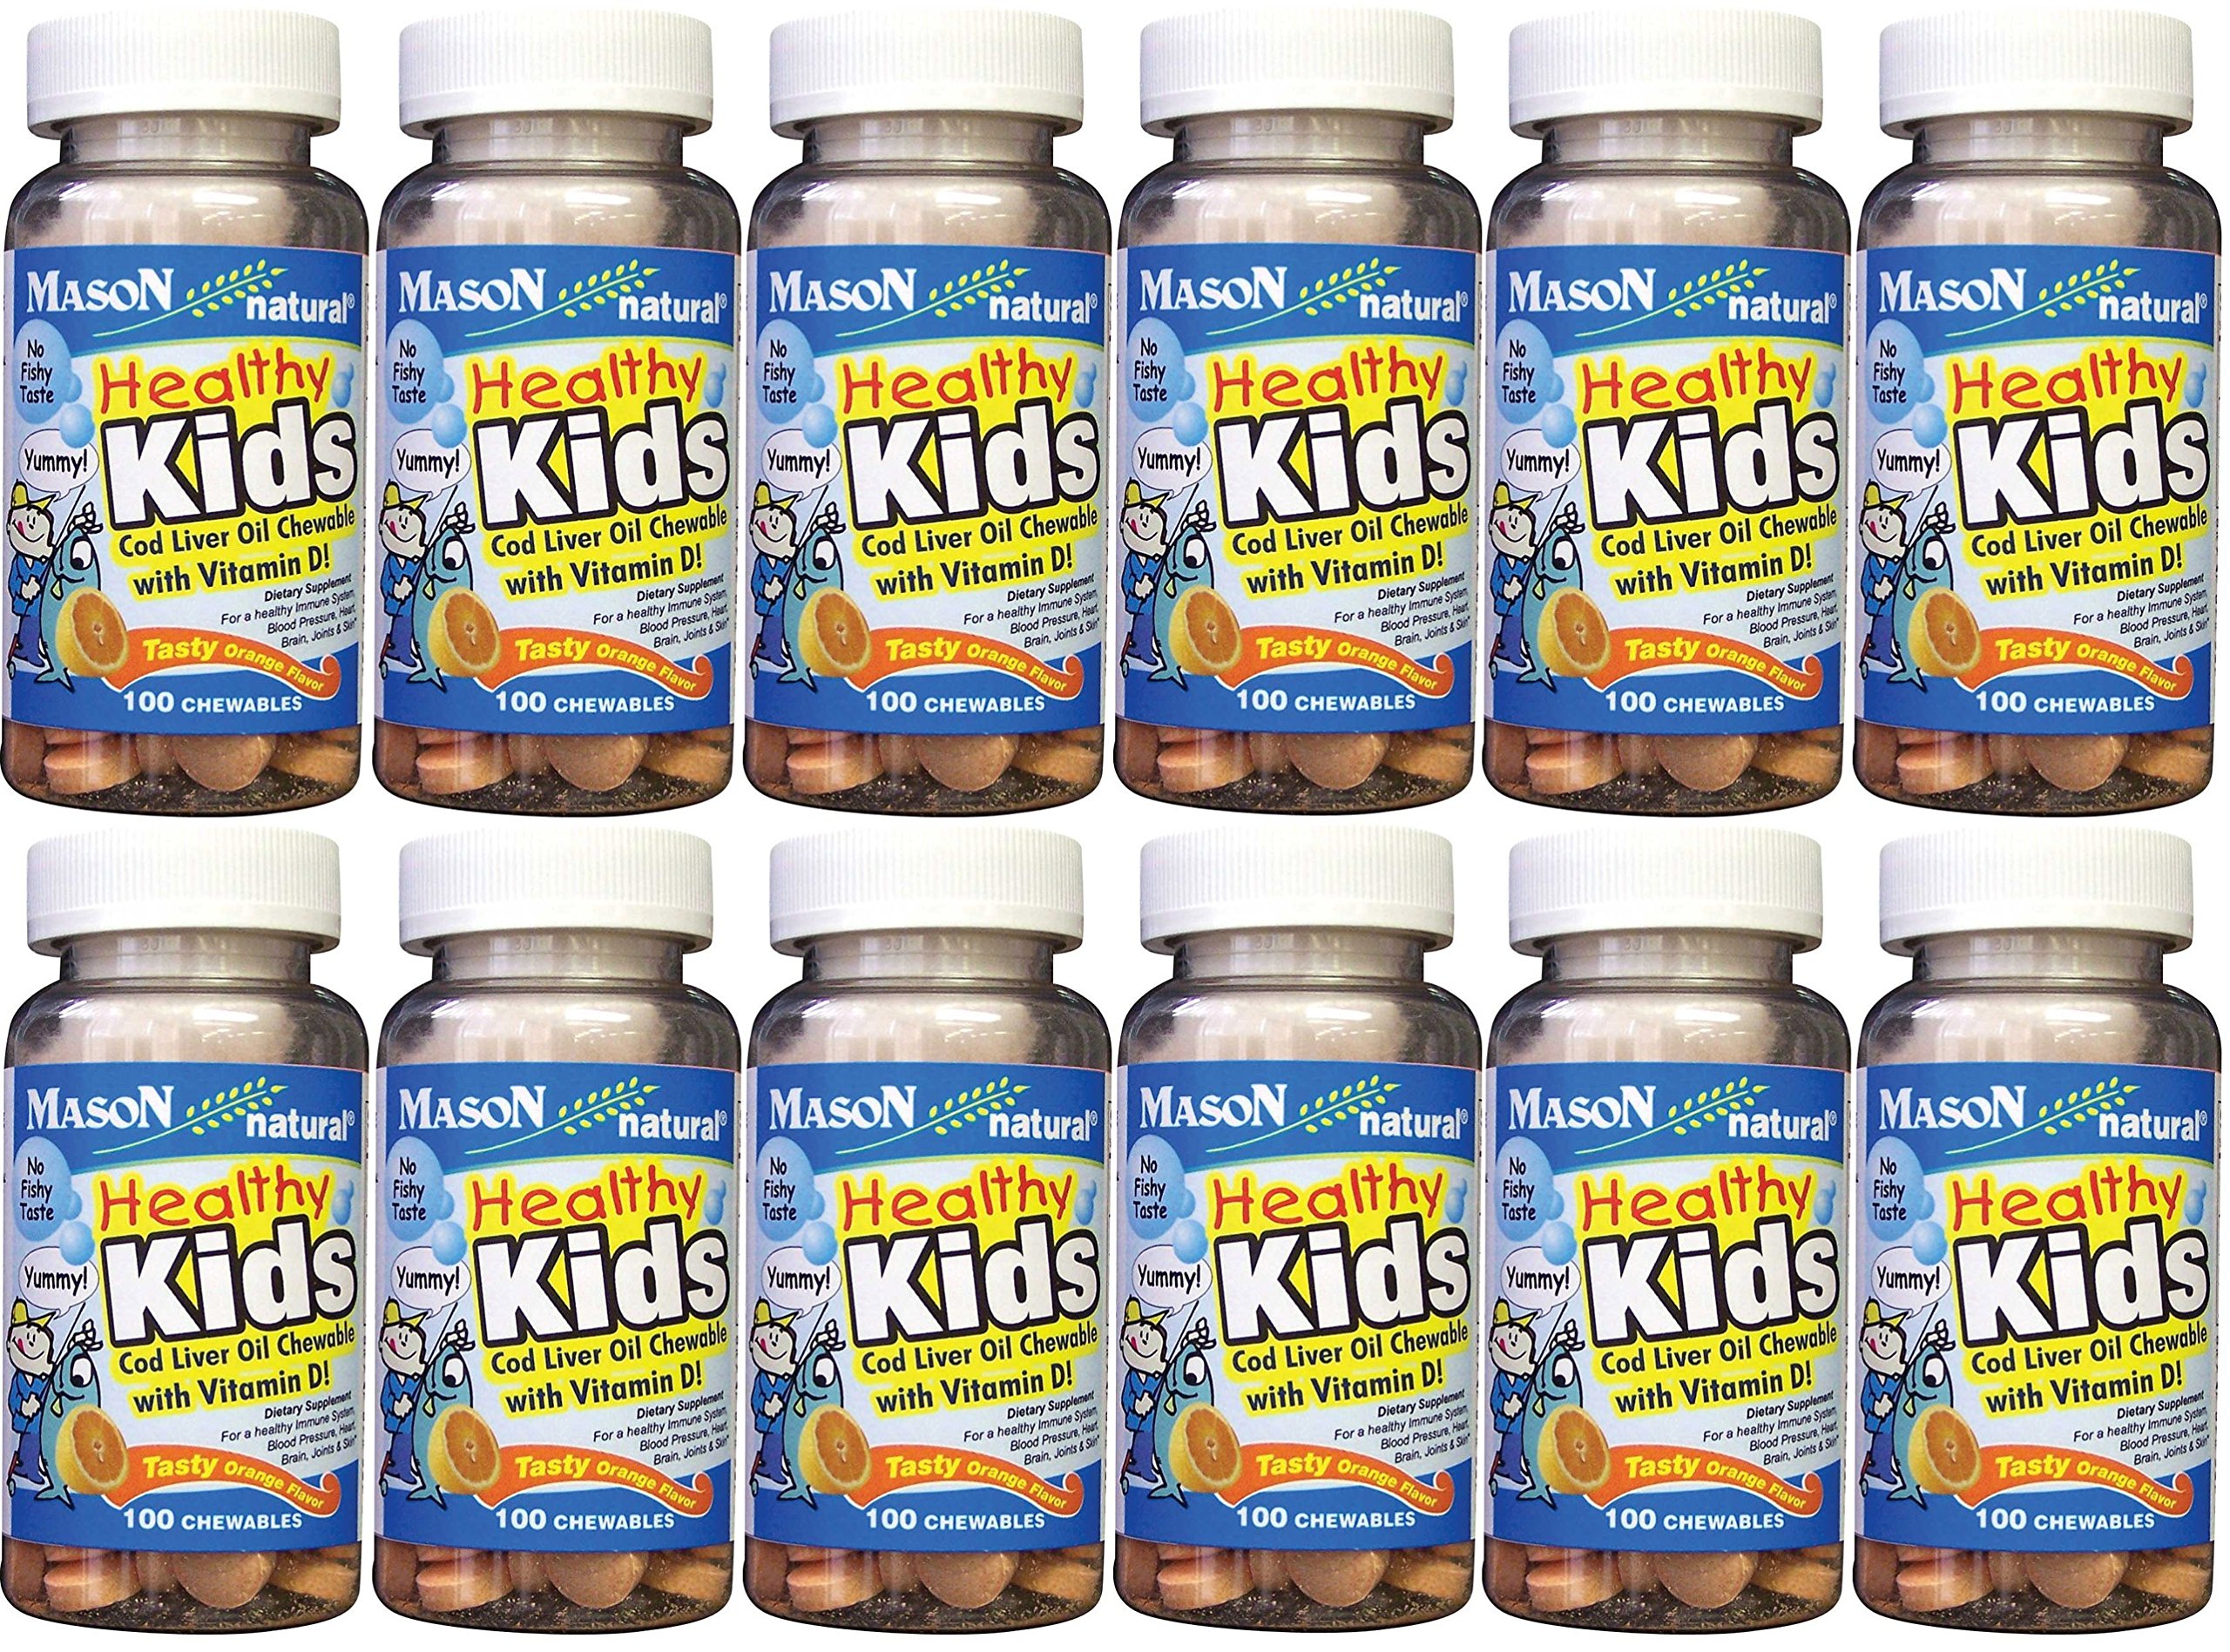 Mason Vitamins Healthy Kids Cod Liver Oil and Vitamin D, Tasty Chewable Orange Flavor, 100 Tablets per Bottle Pack of 12 Total 1200 Tablets